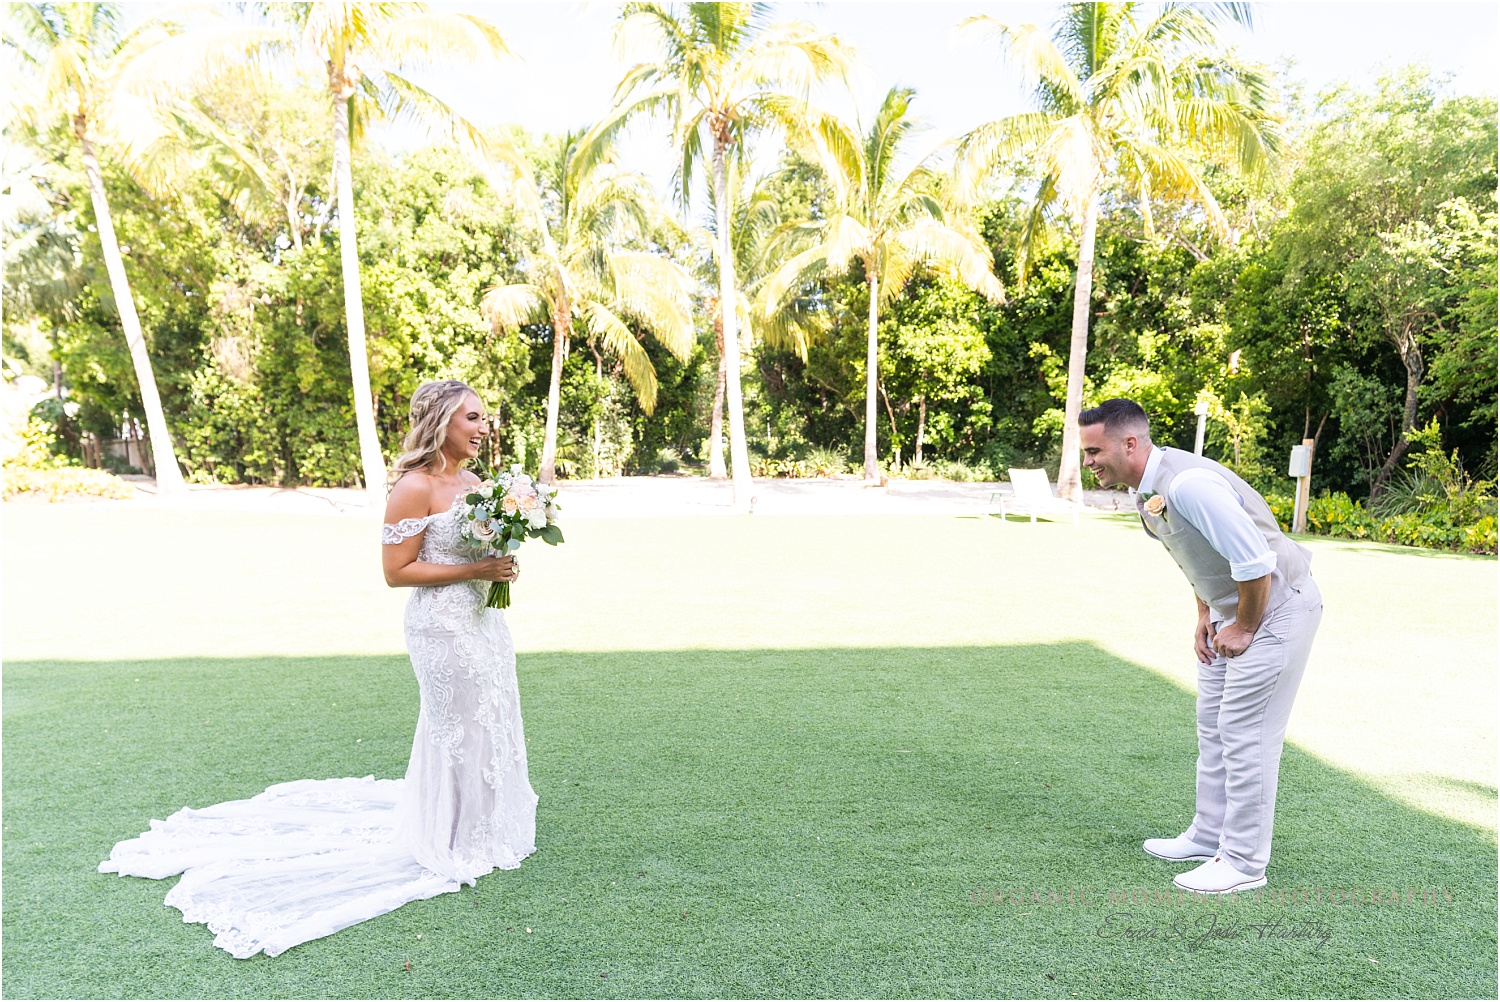 Baker's Cay Resort Wedding organic moments photography